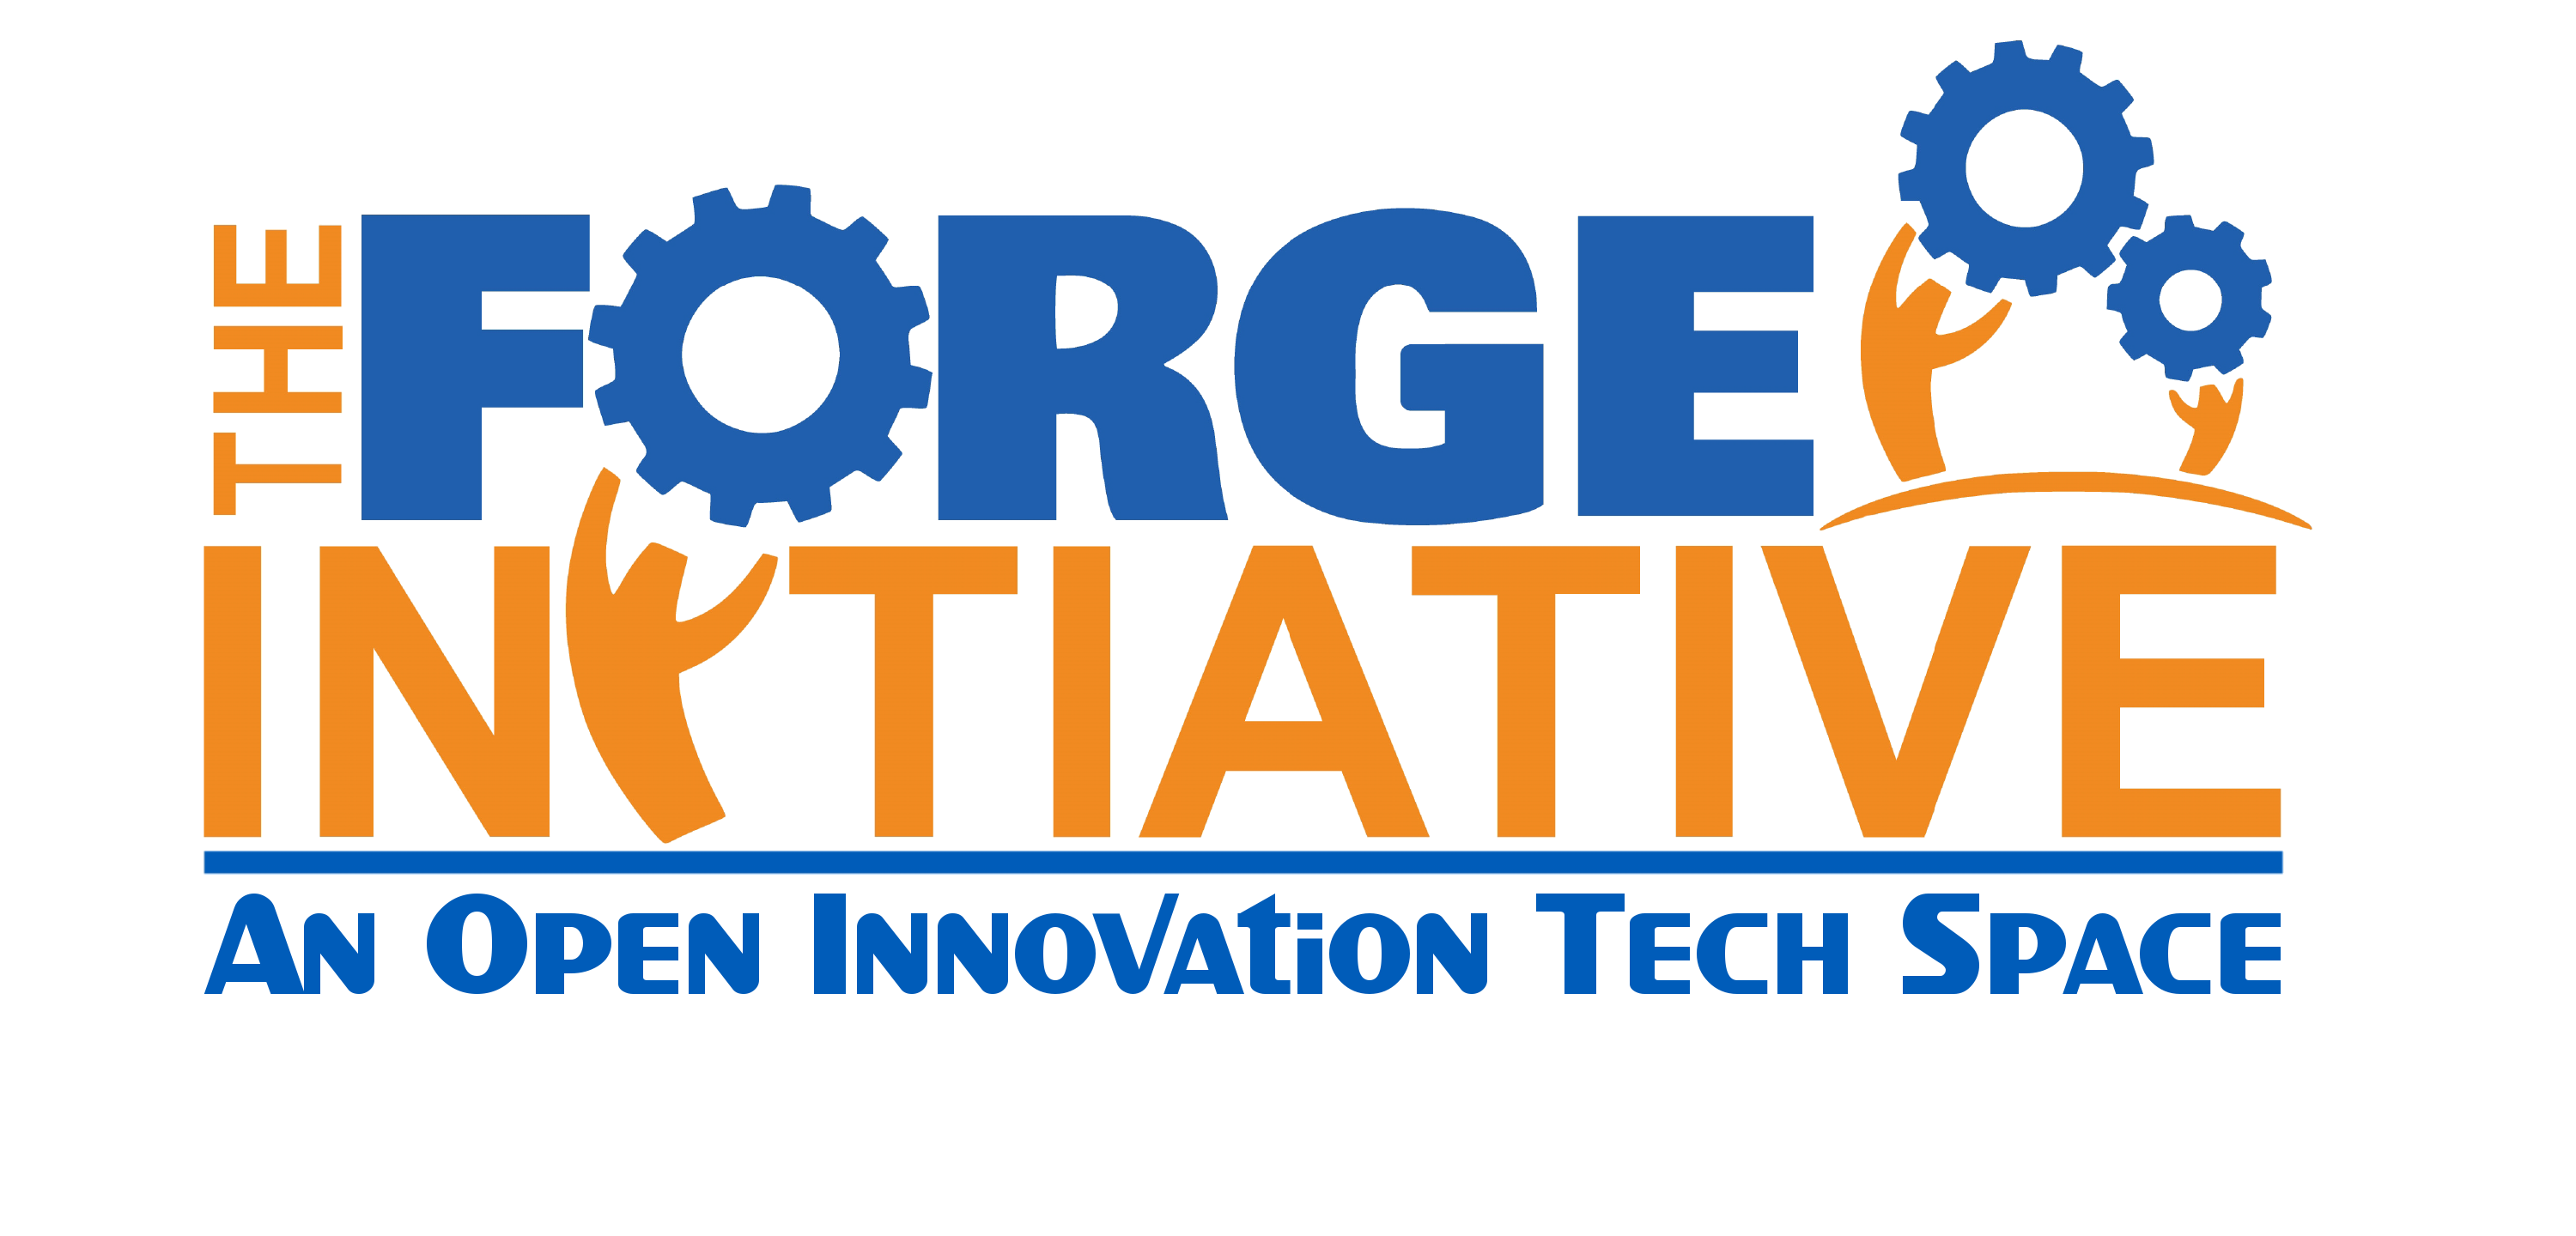 The Forge Initiative logo